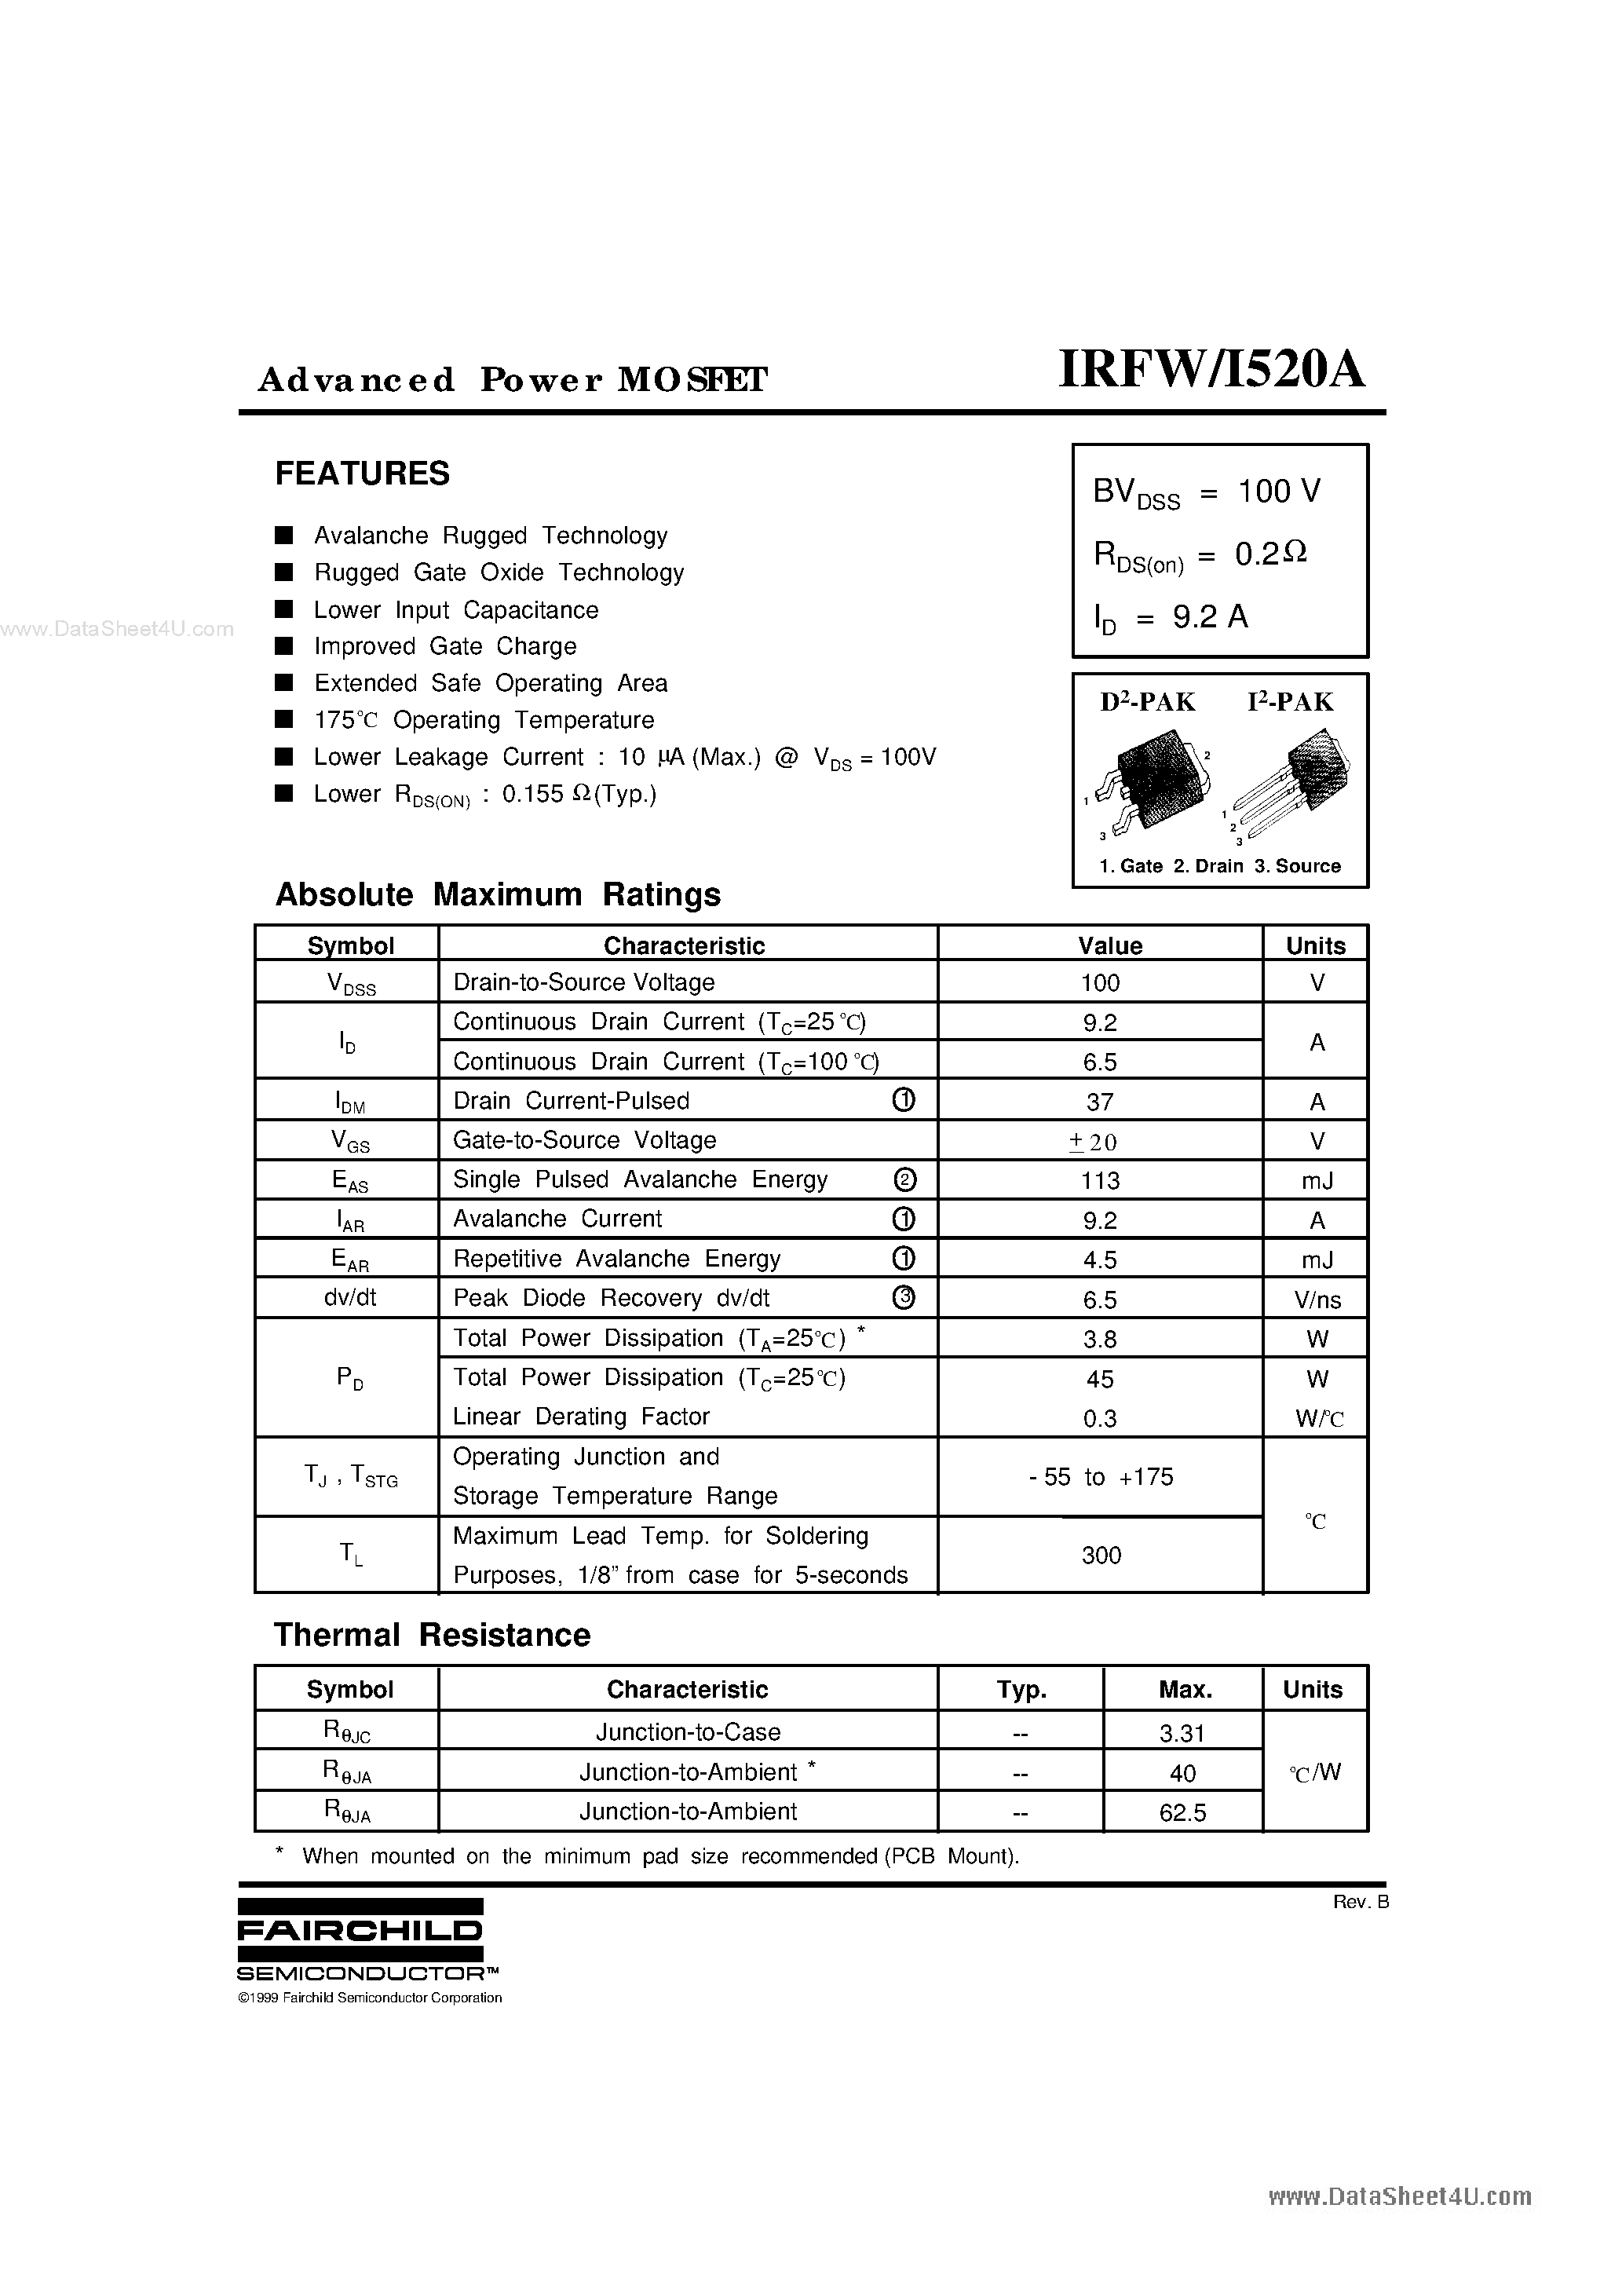 Даташит IRFI520A - Advanced Power MOSFET страница 1